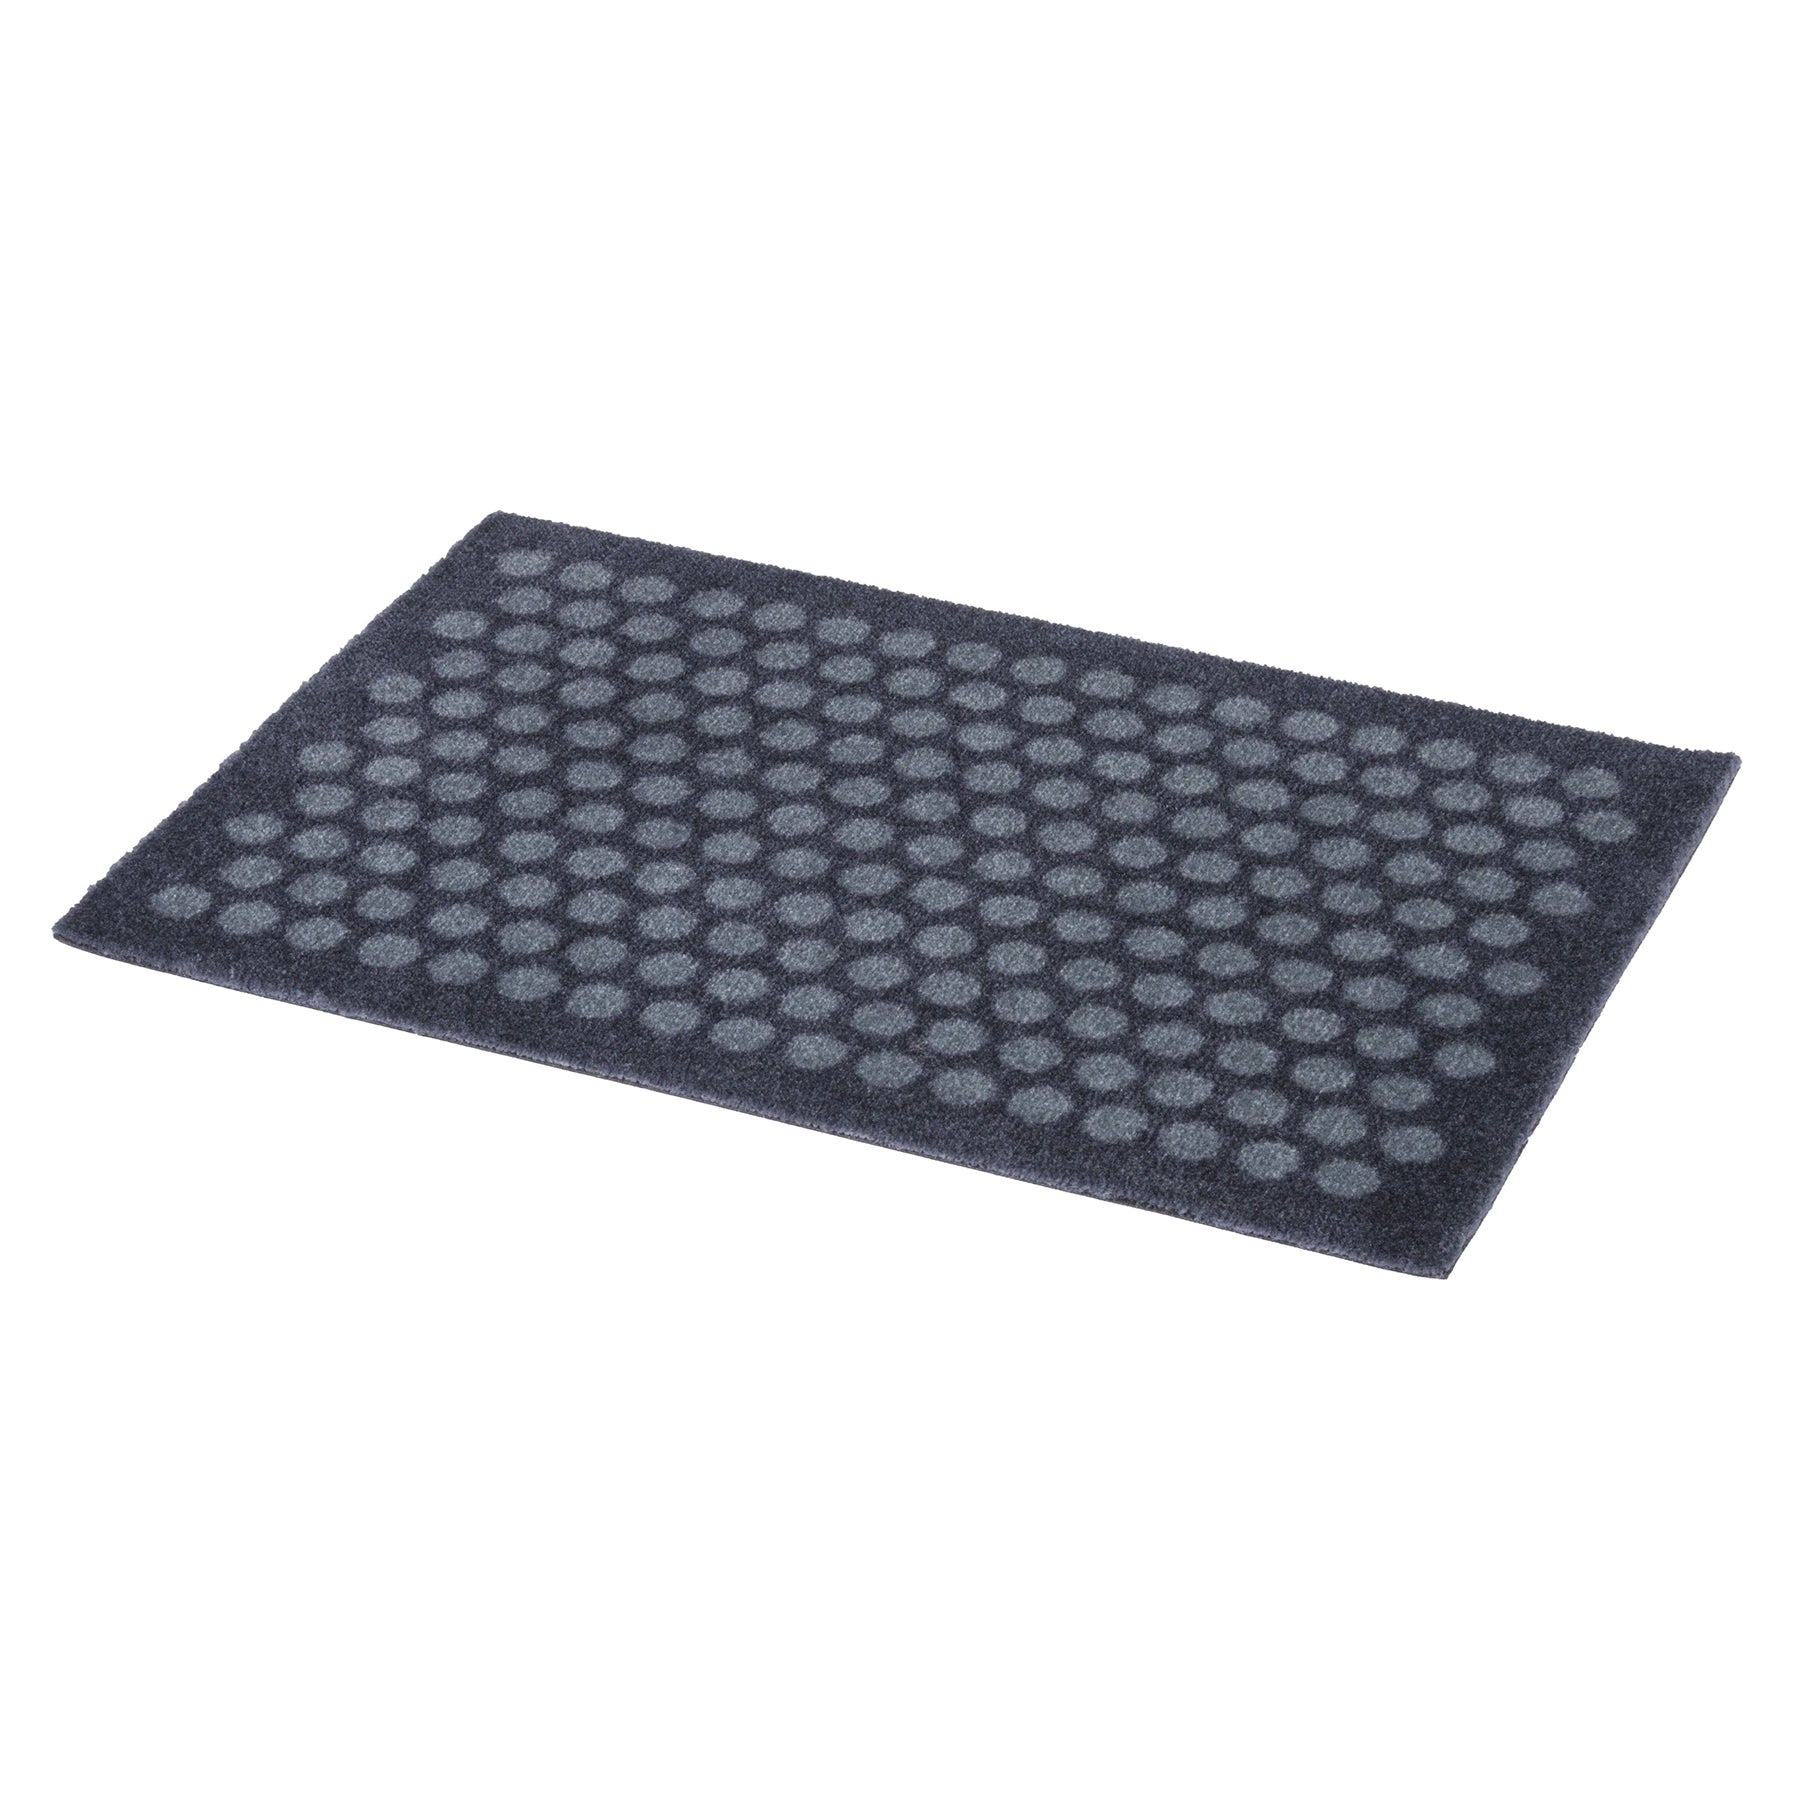 Floor mat 40 x 60 cm - dots/gray